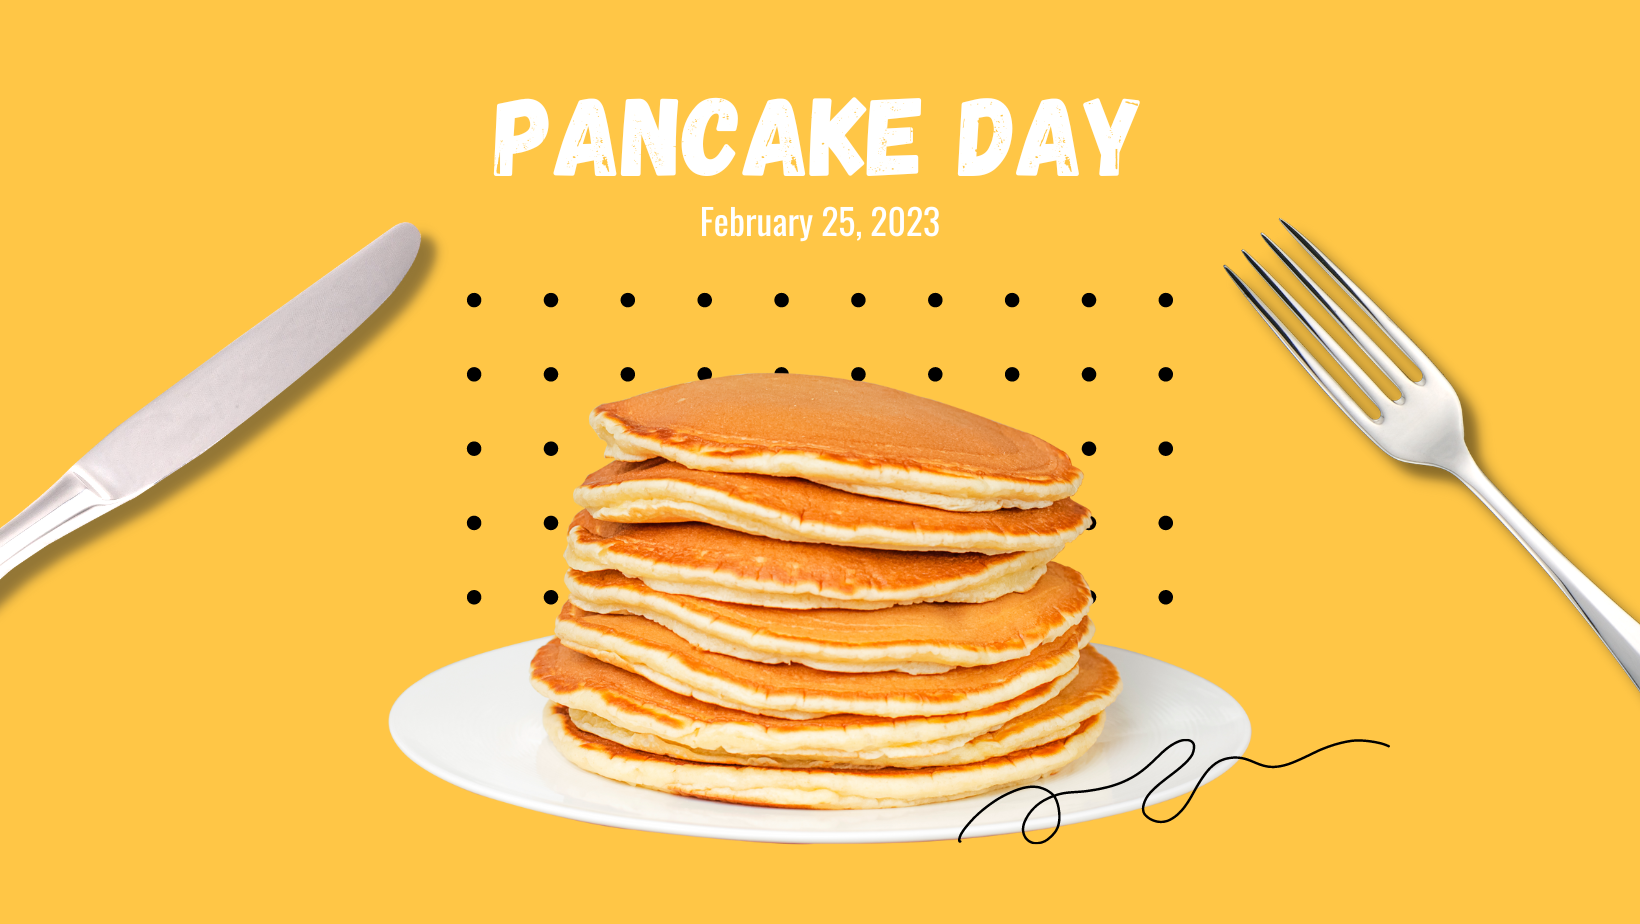 64th Annual Pancake Day